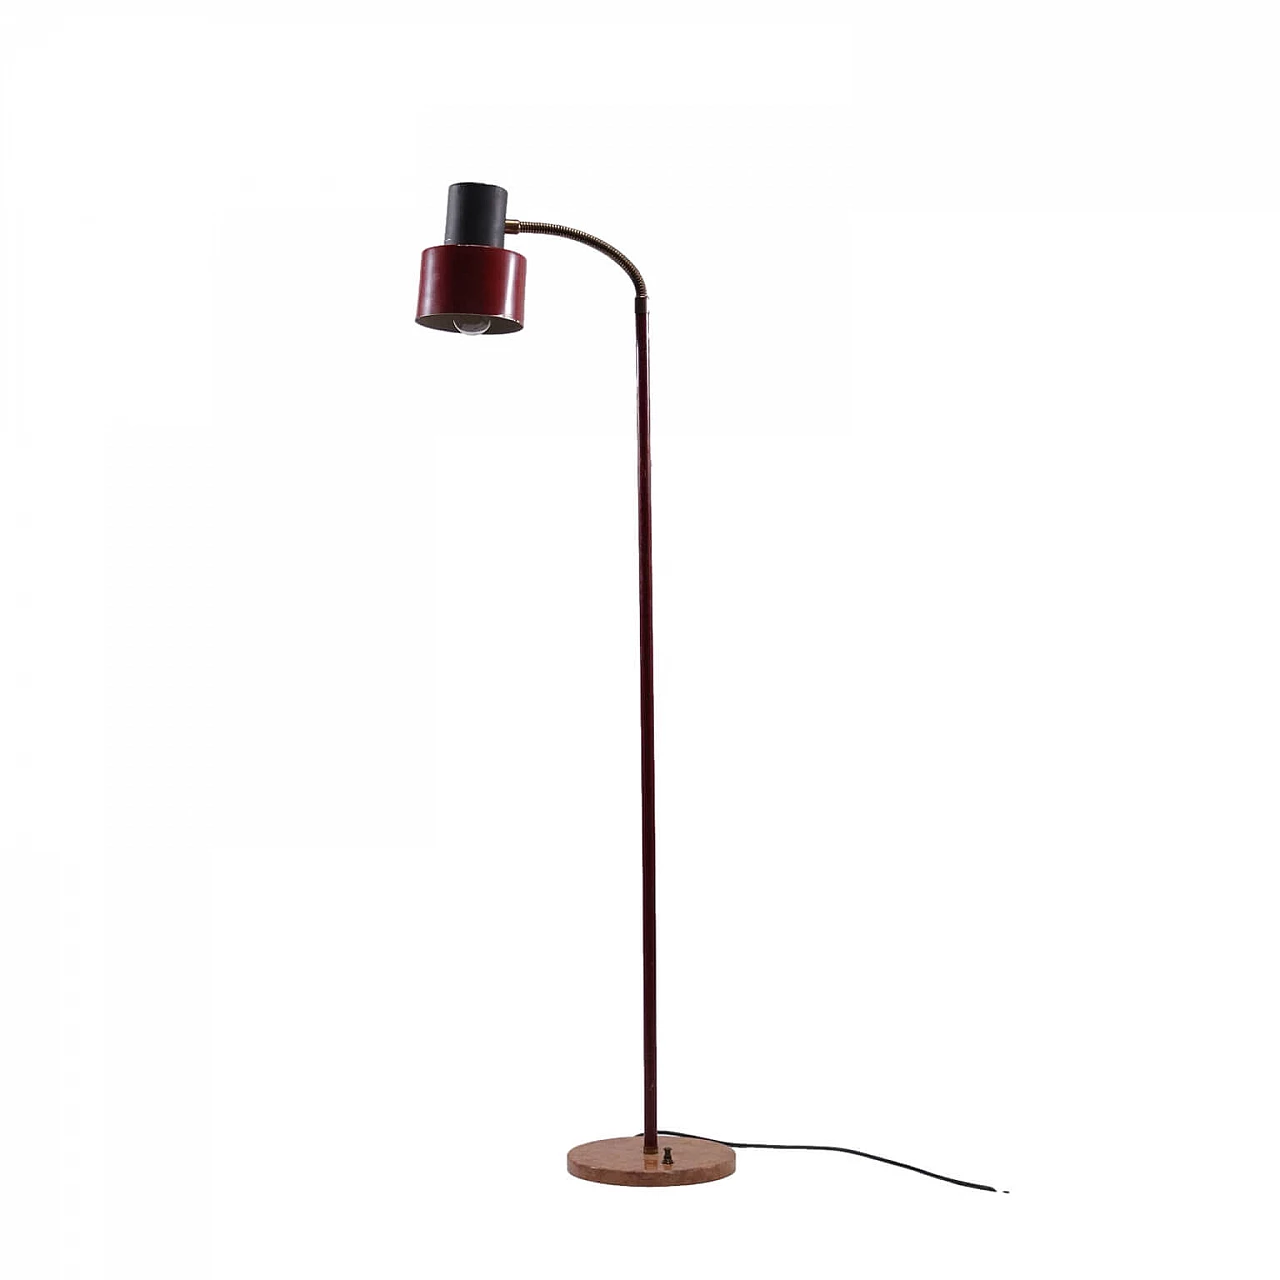 Stilux adjustable lamp, 1960s 1